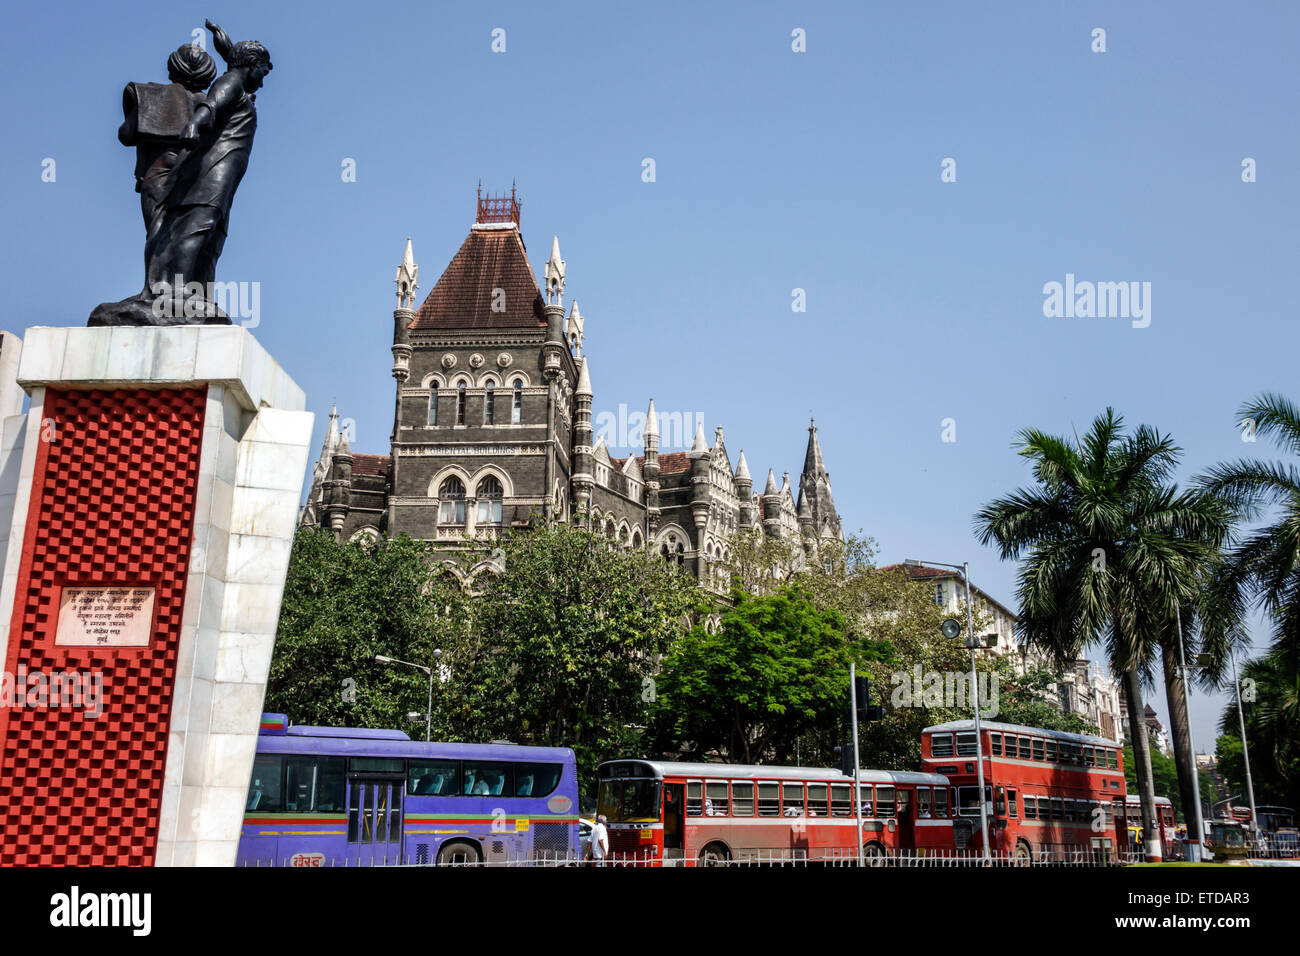 Mumbai India,Fort Mumbai,Kala Ghoda,Floral Fountain,Hutatma Chowk,Martyr's Square,Samyukta Maharashtra movement memorial,BEST bus,coach,traffic,Orient Stock Photo